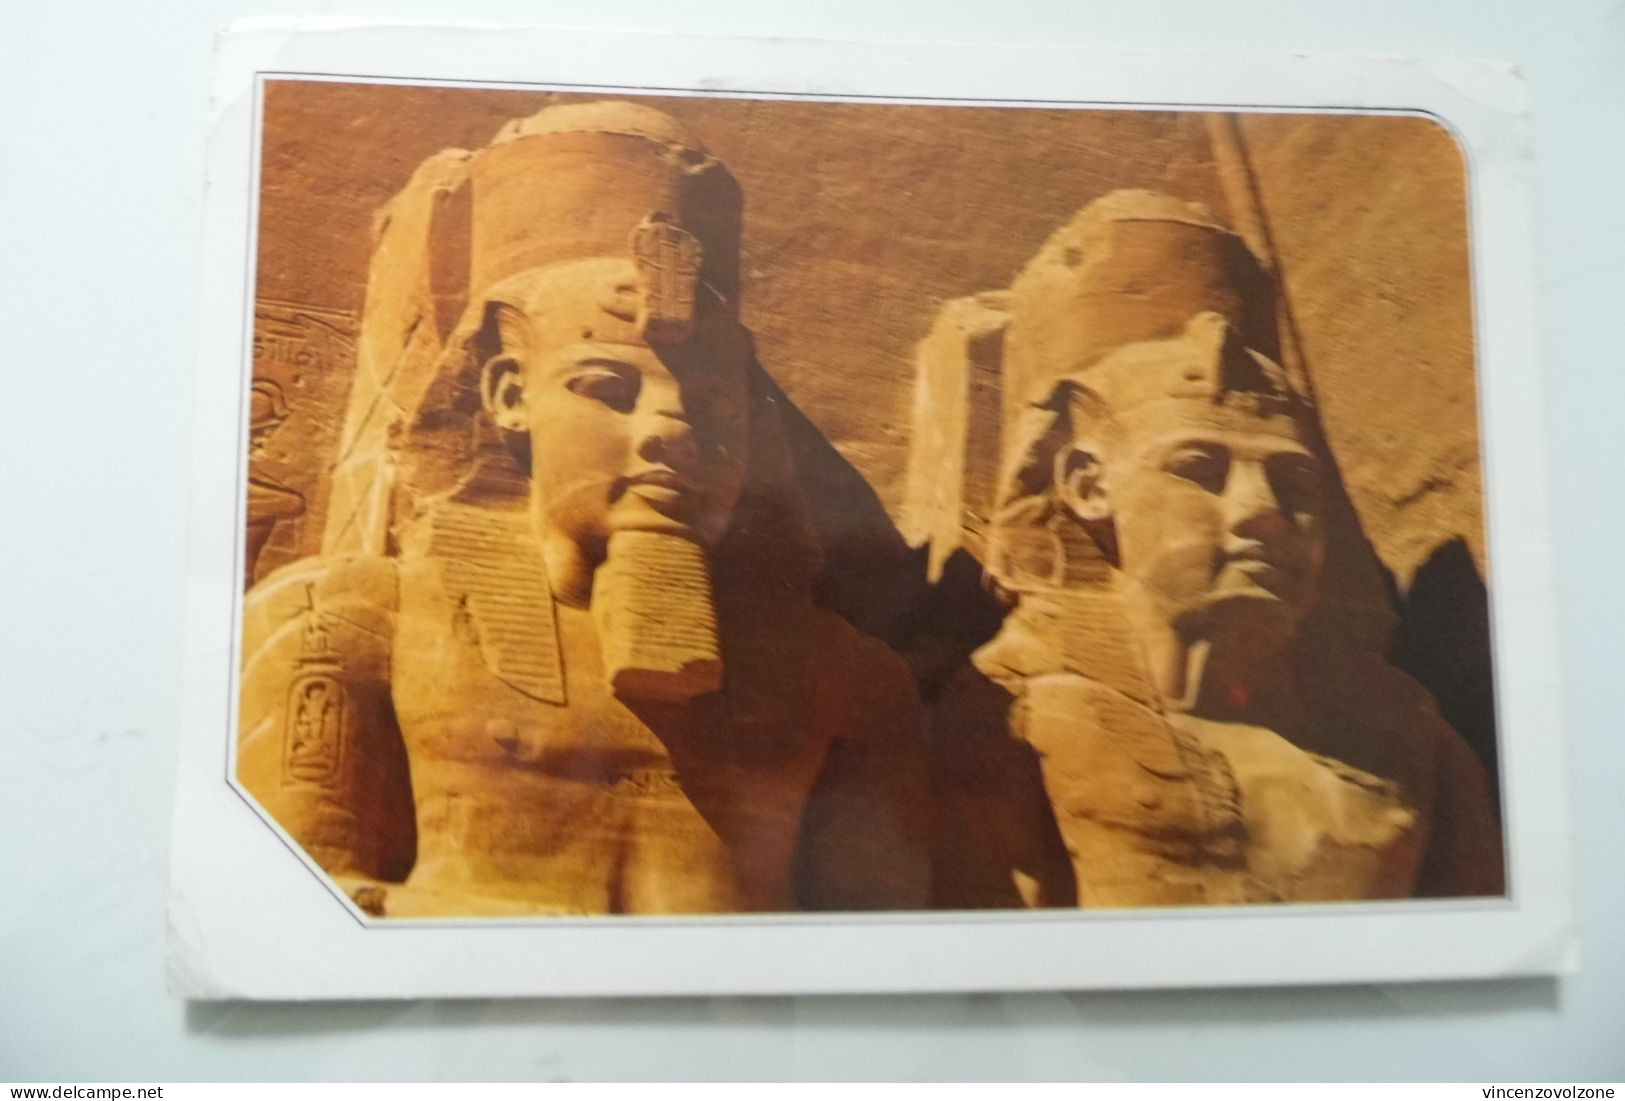 Cartolina Viaggiata "ABOU SIMBEL" 1995 - Abu Simbel Temples